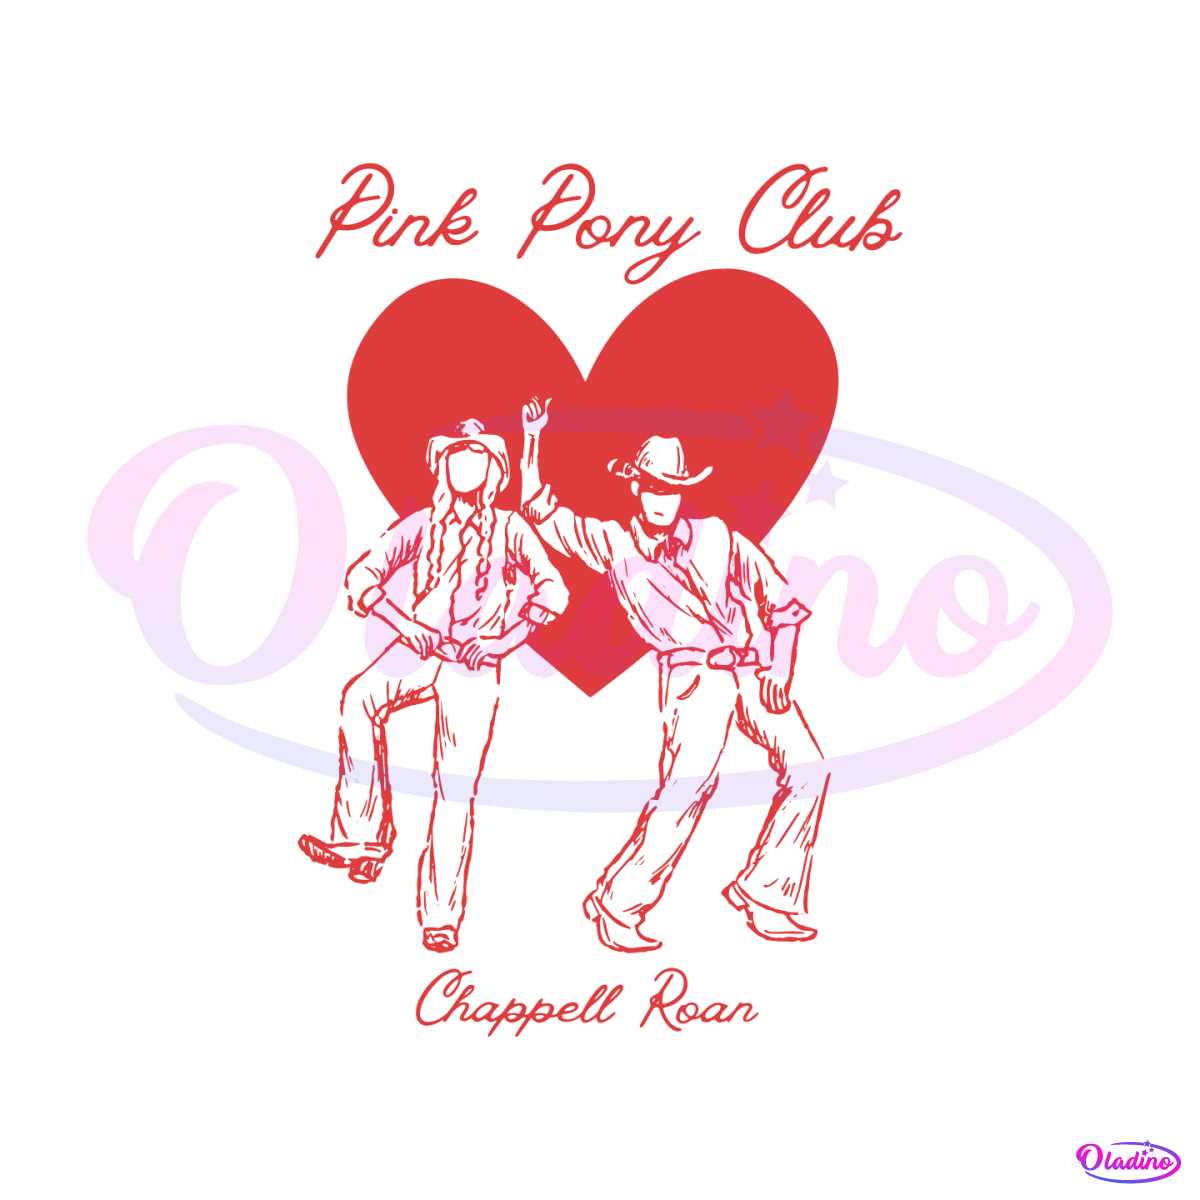 chappell-roan-pink-pony-club-olivia-rodrigo-tour-svg